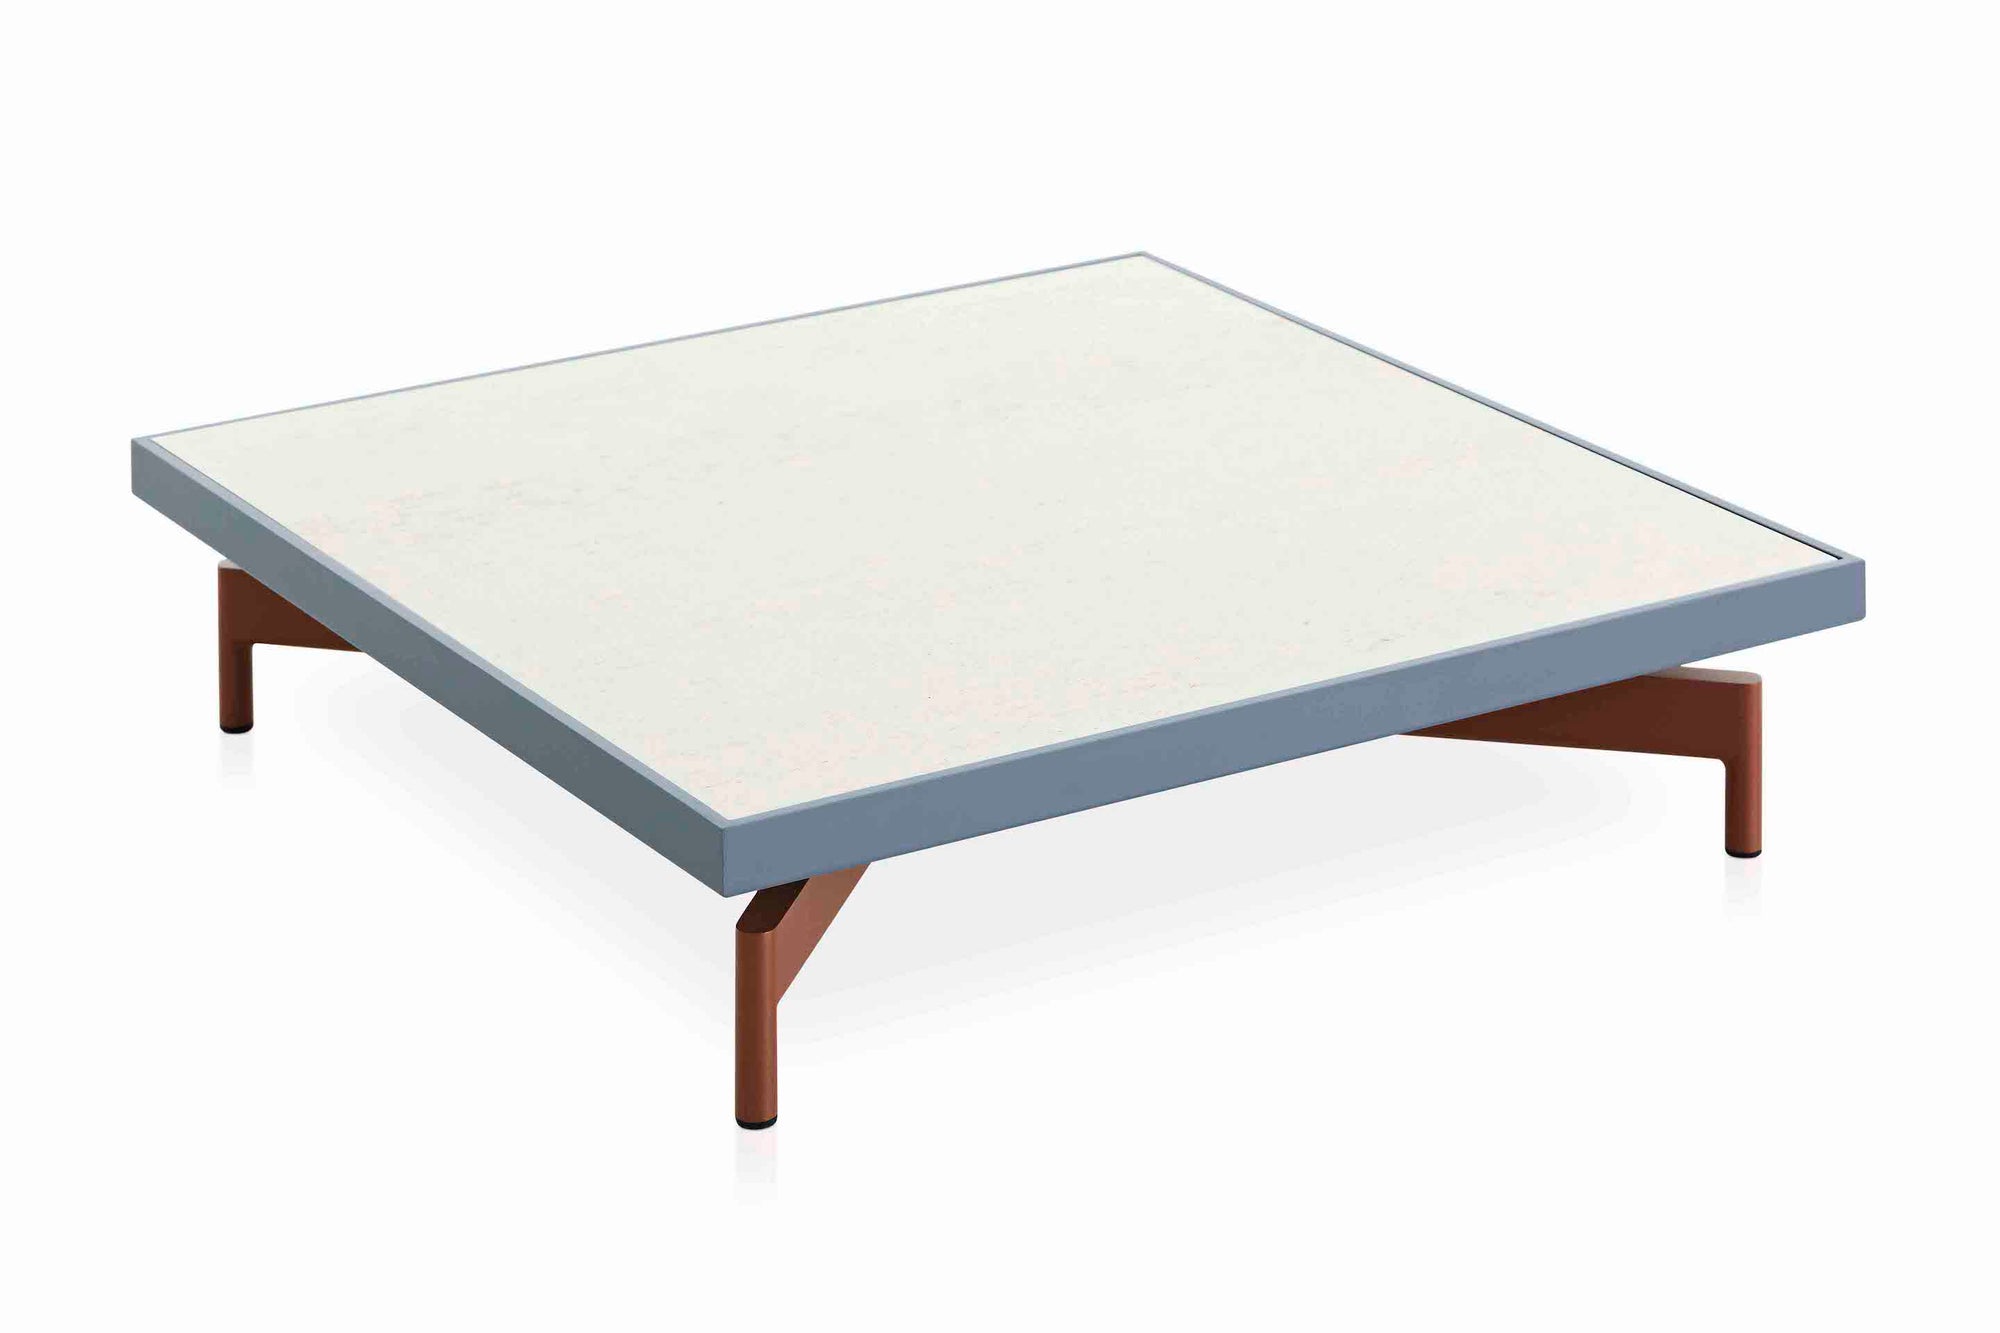 Gandia Blasco Onde coffee table 85 cm